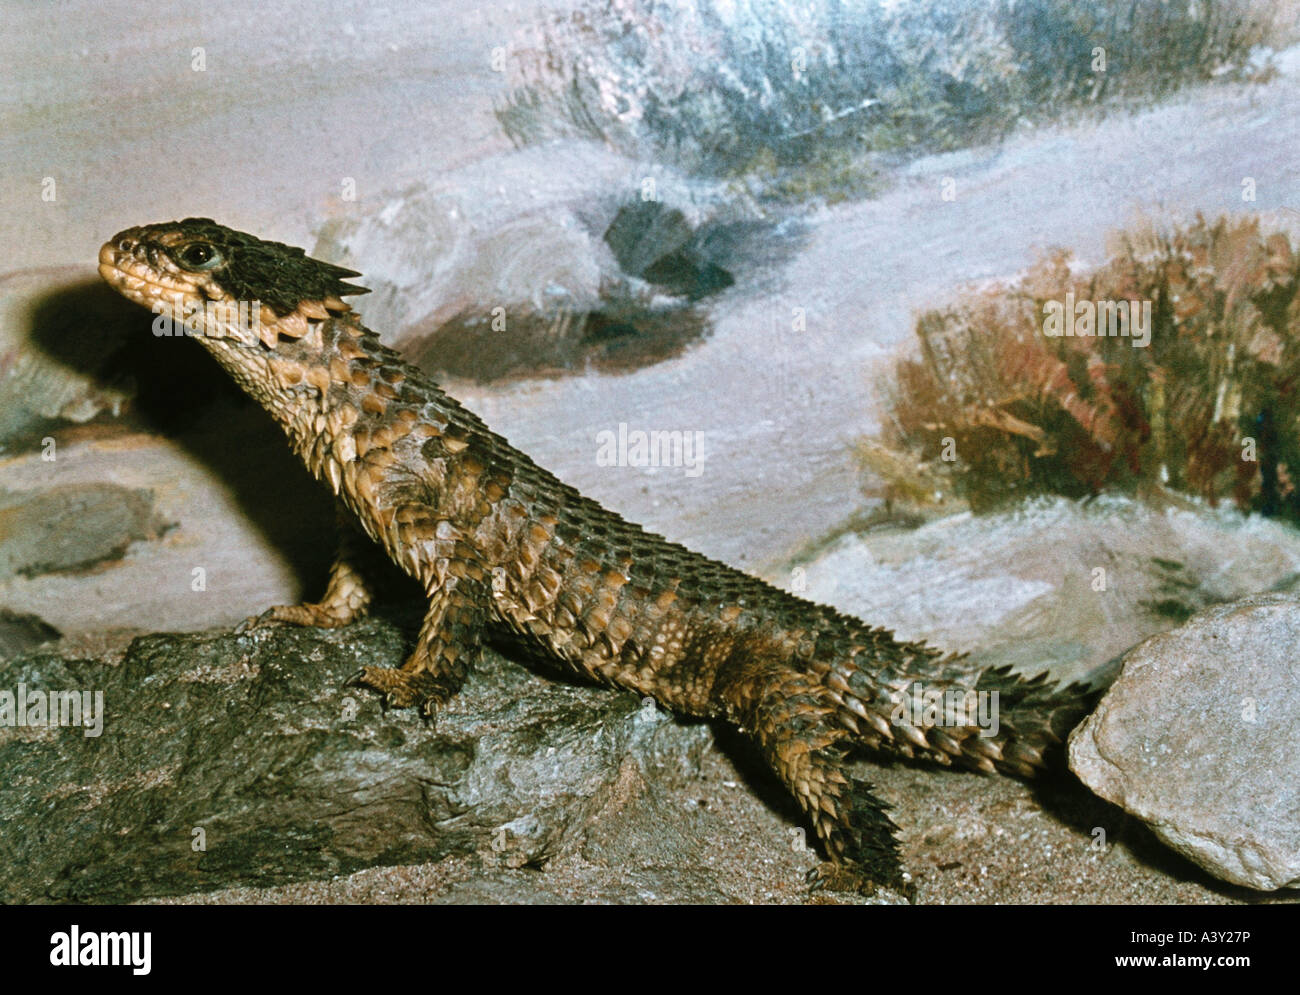 zoology / animals, reptiles, lizards, Giant Girdled Lizard, (Cordylus giganteus), standing at rocks, distribution: South Africa, Stock Photo